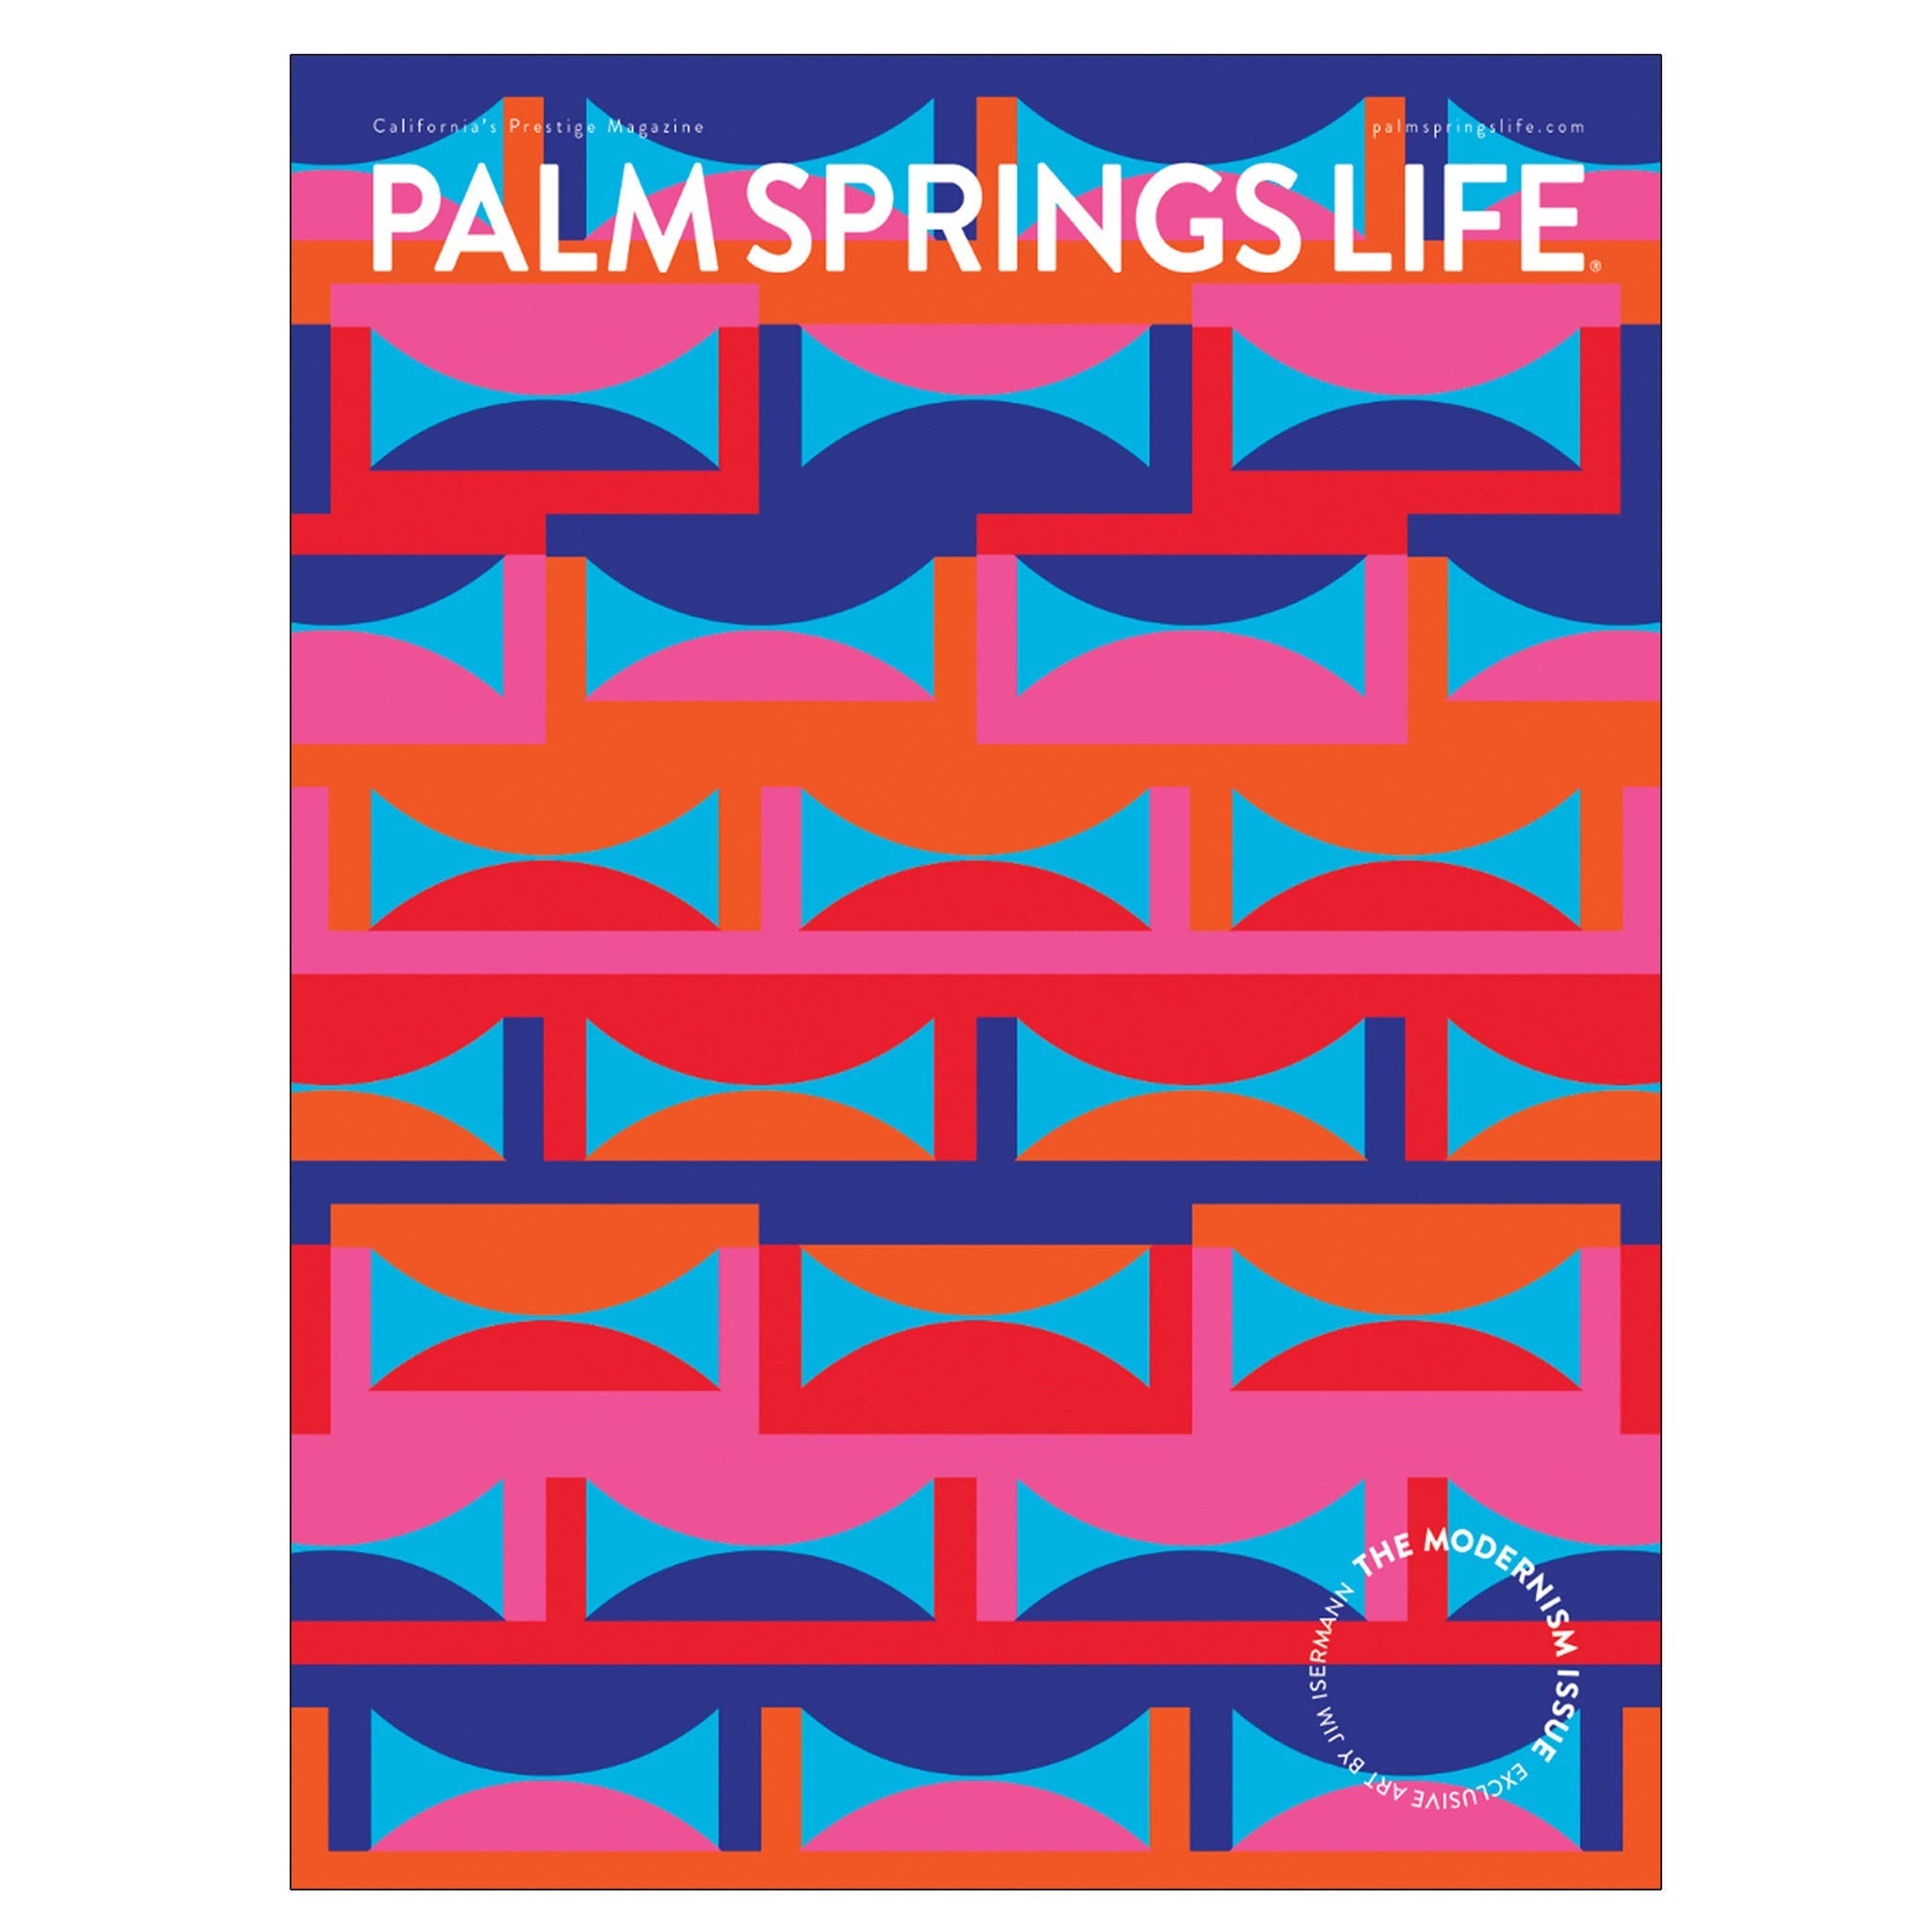 Palm Springs Life/Isermann February 2020 Cover Poster